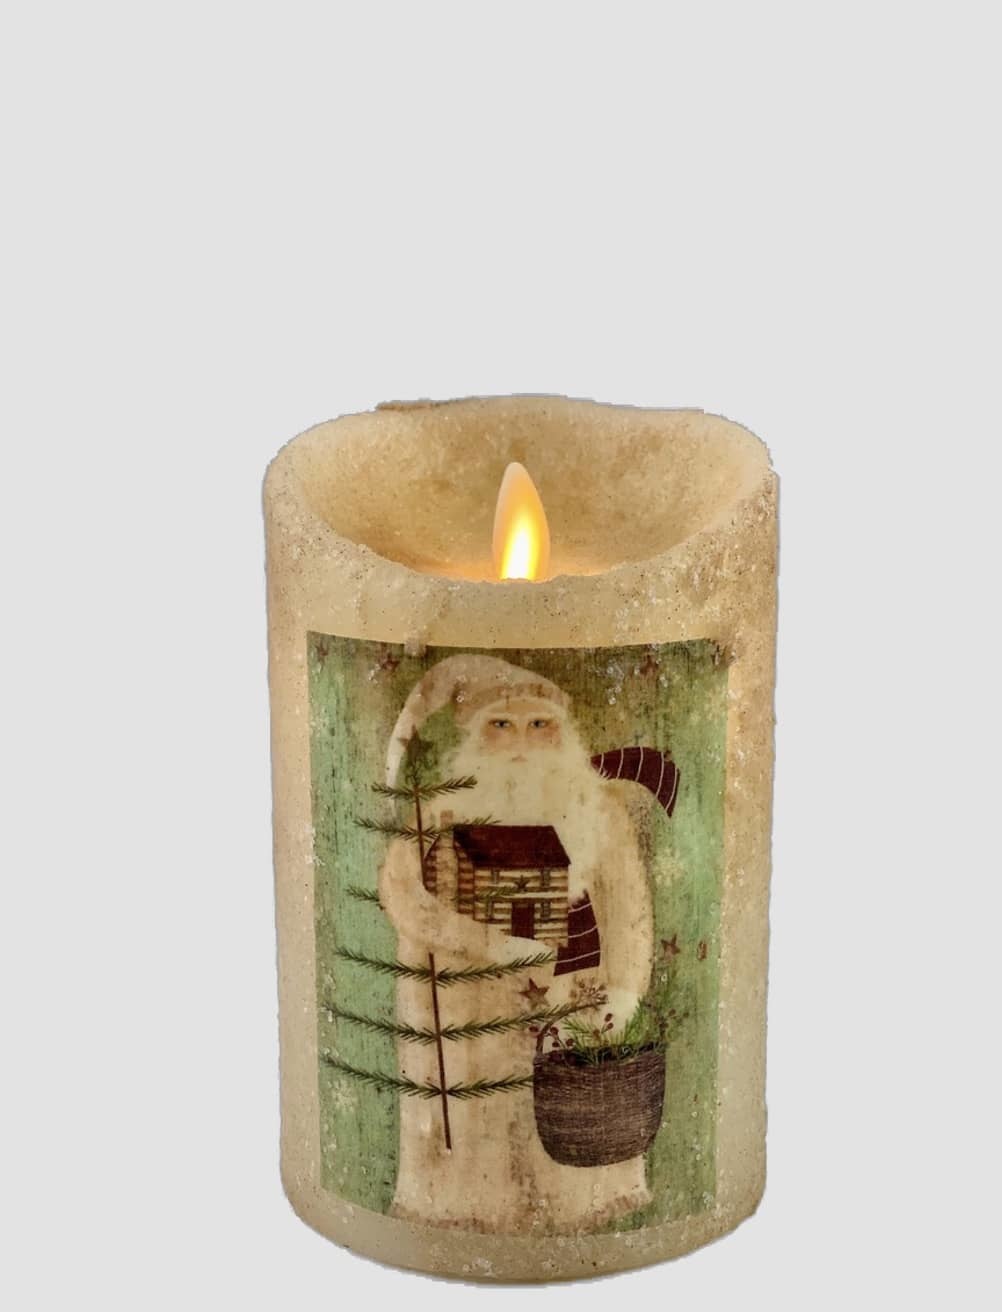 Nana's Farmhouse Santa Holding Basket Ivory Moving Flame Pillar Candle - 3.5x5 Brand: Nana's Farmhouse